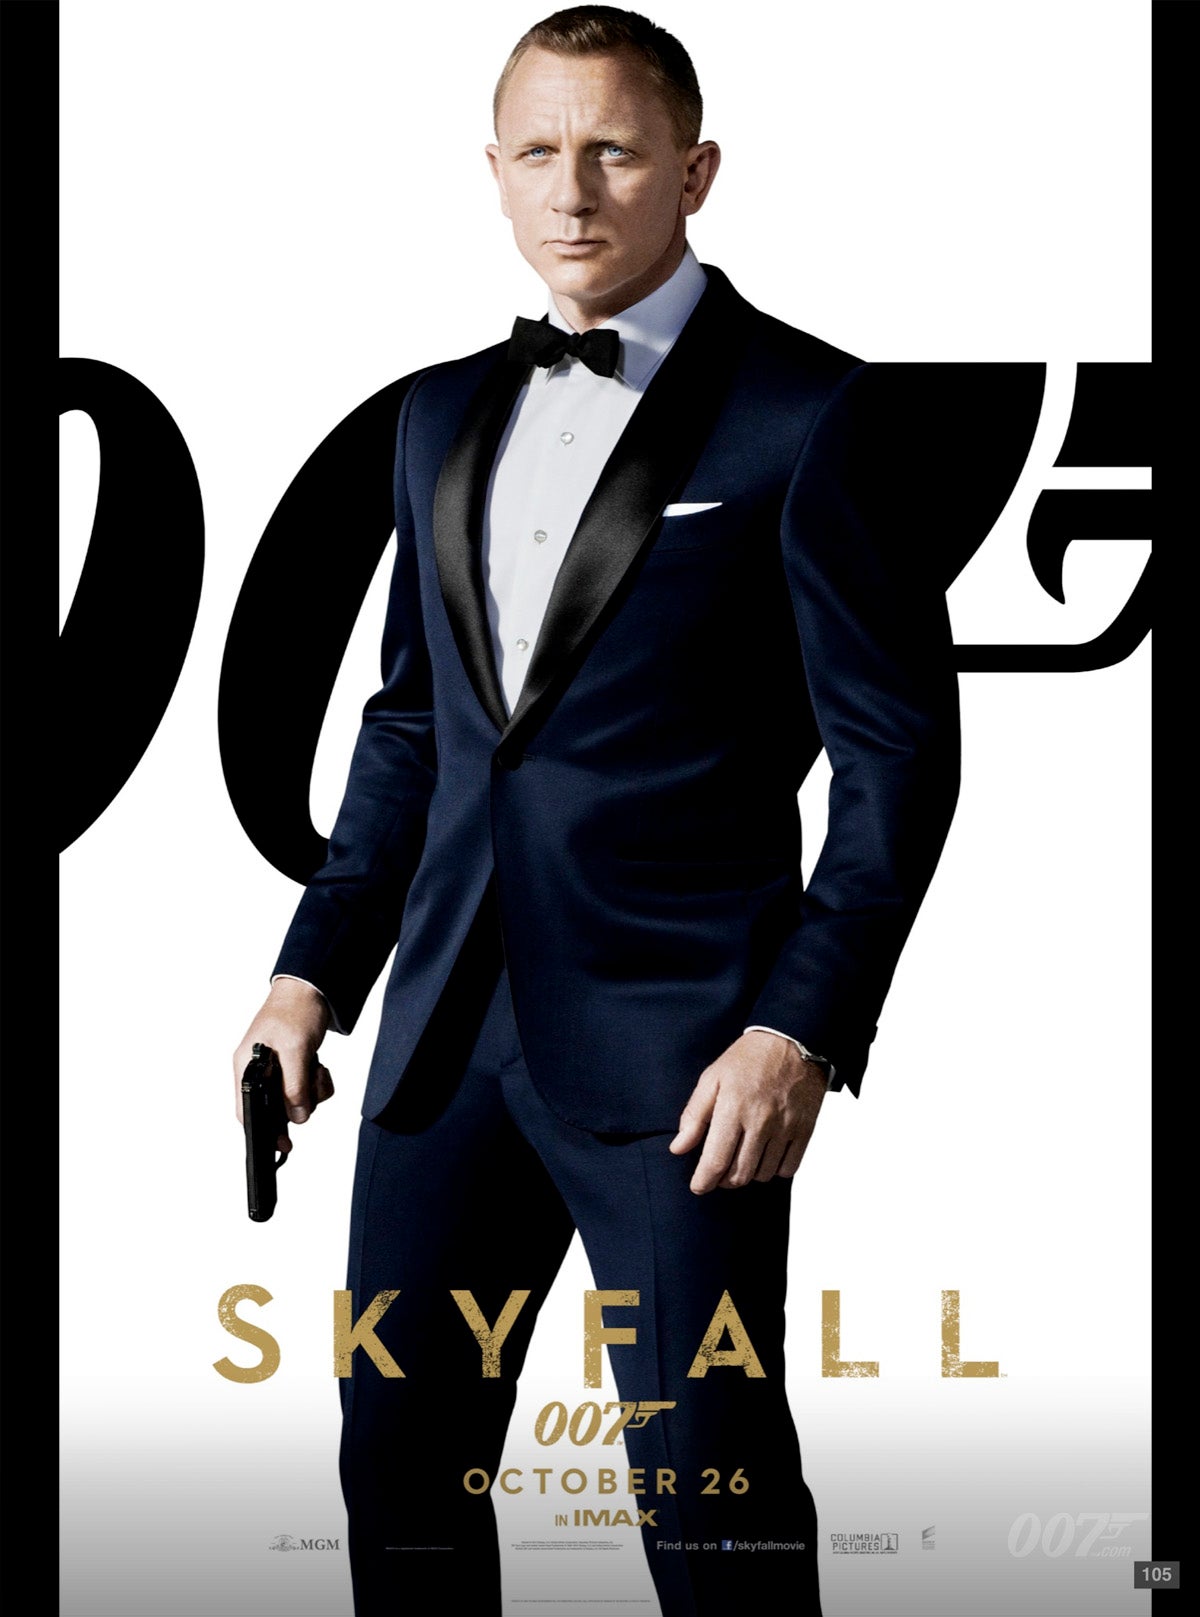 The Official James Bond 007 Website | SKYFALL Awards Overview